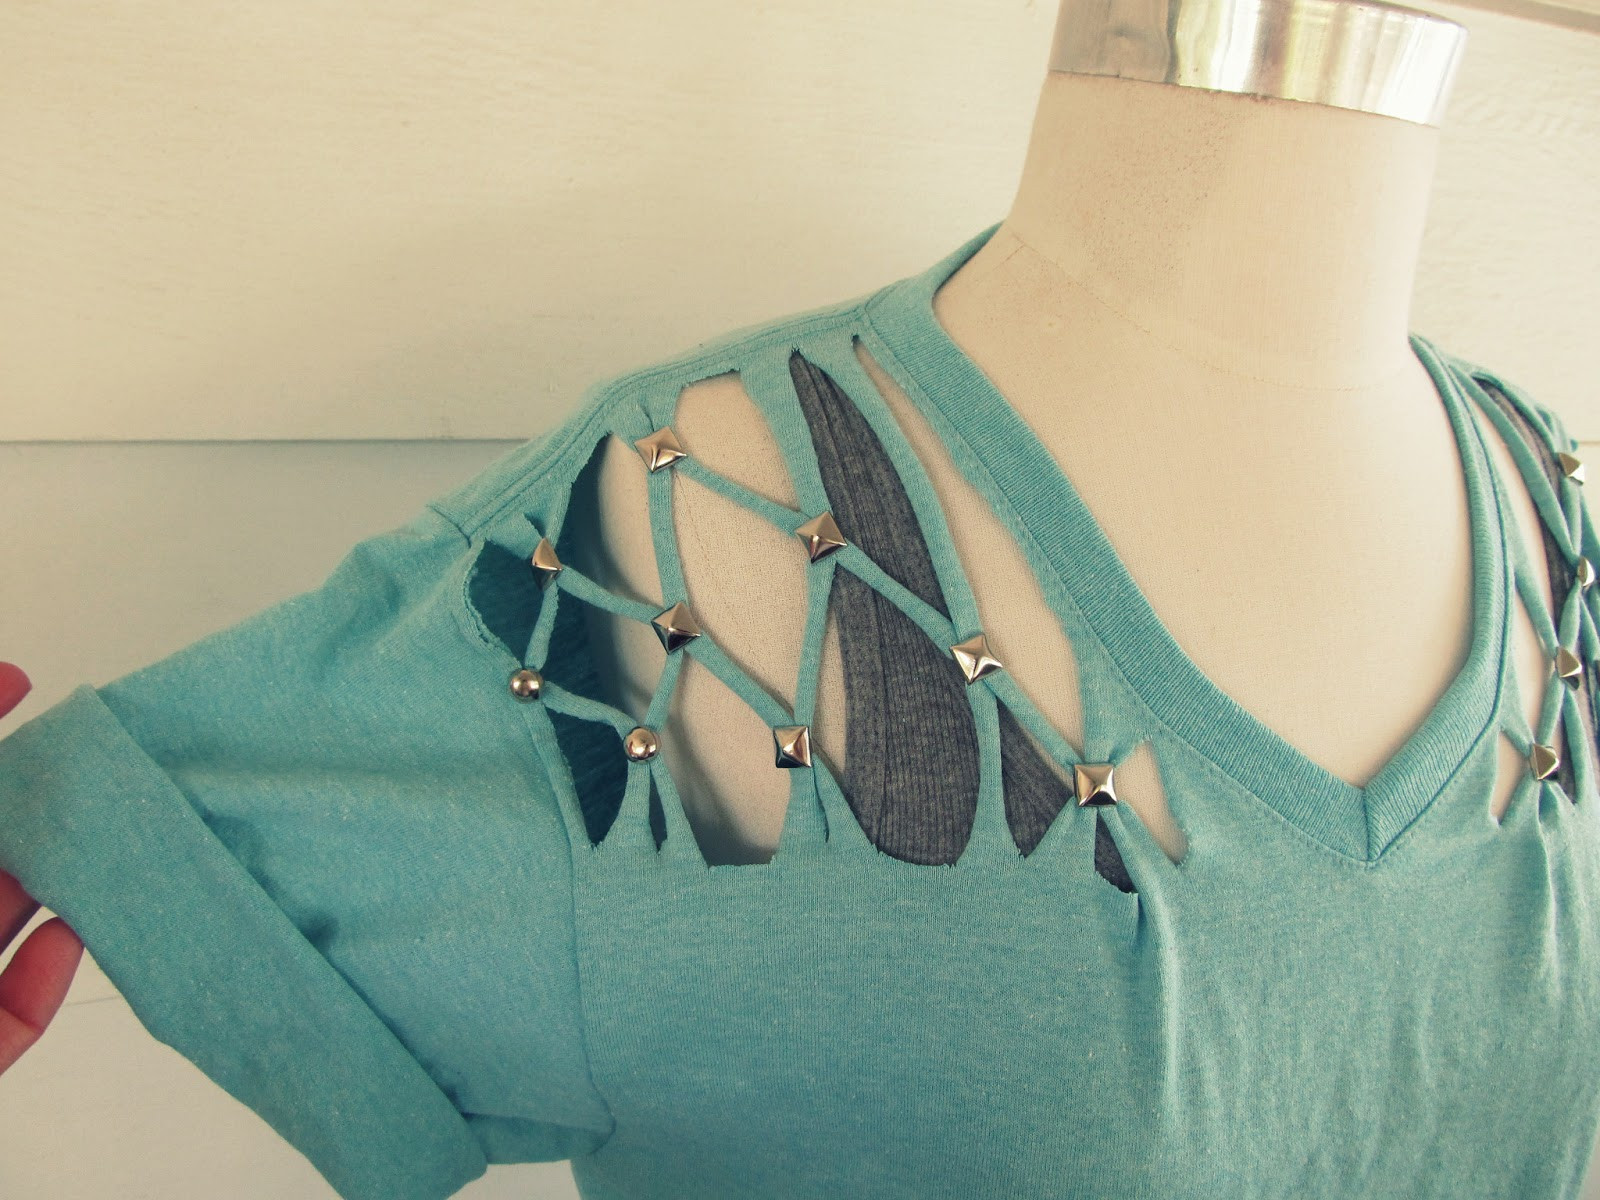 Best ideas about DIY Shirt Cutting
. Save or Pin WobiSobi No Sew Lattice Stud T shirt DIY Now.